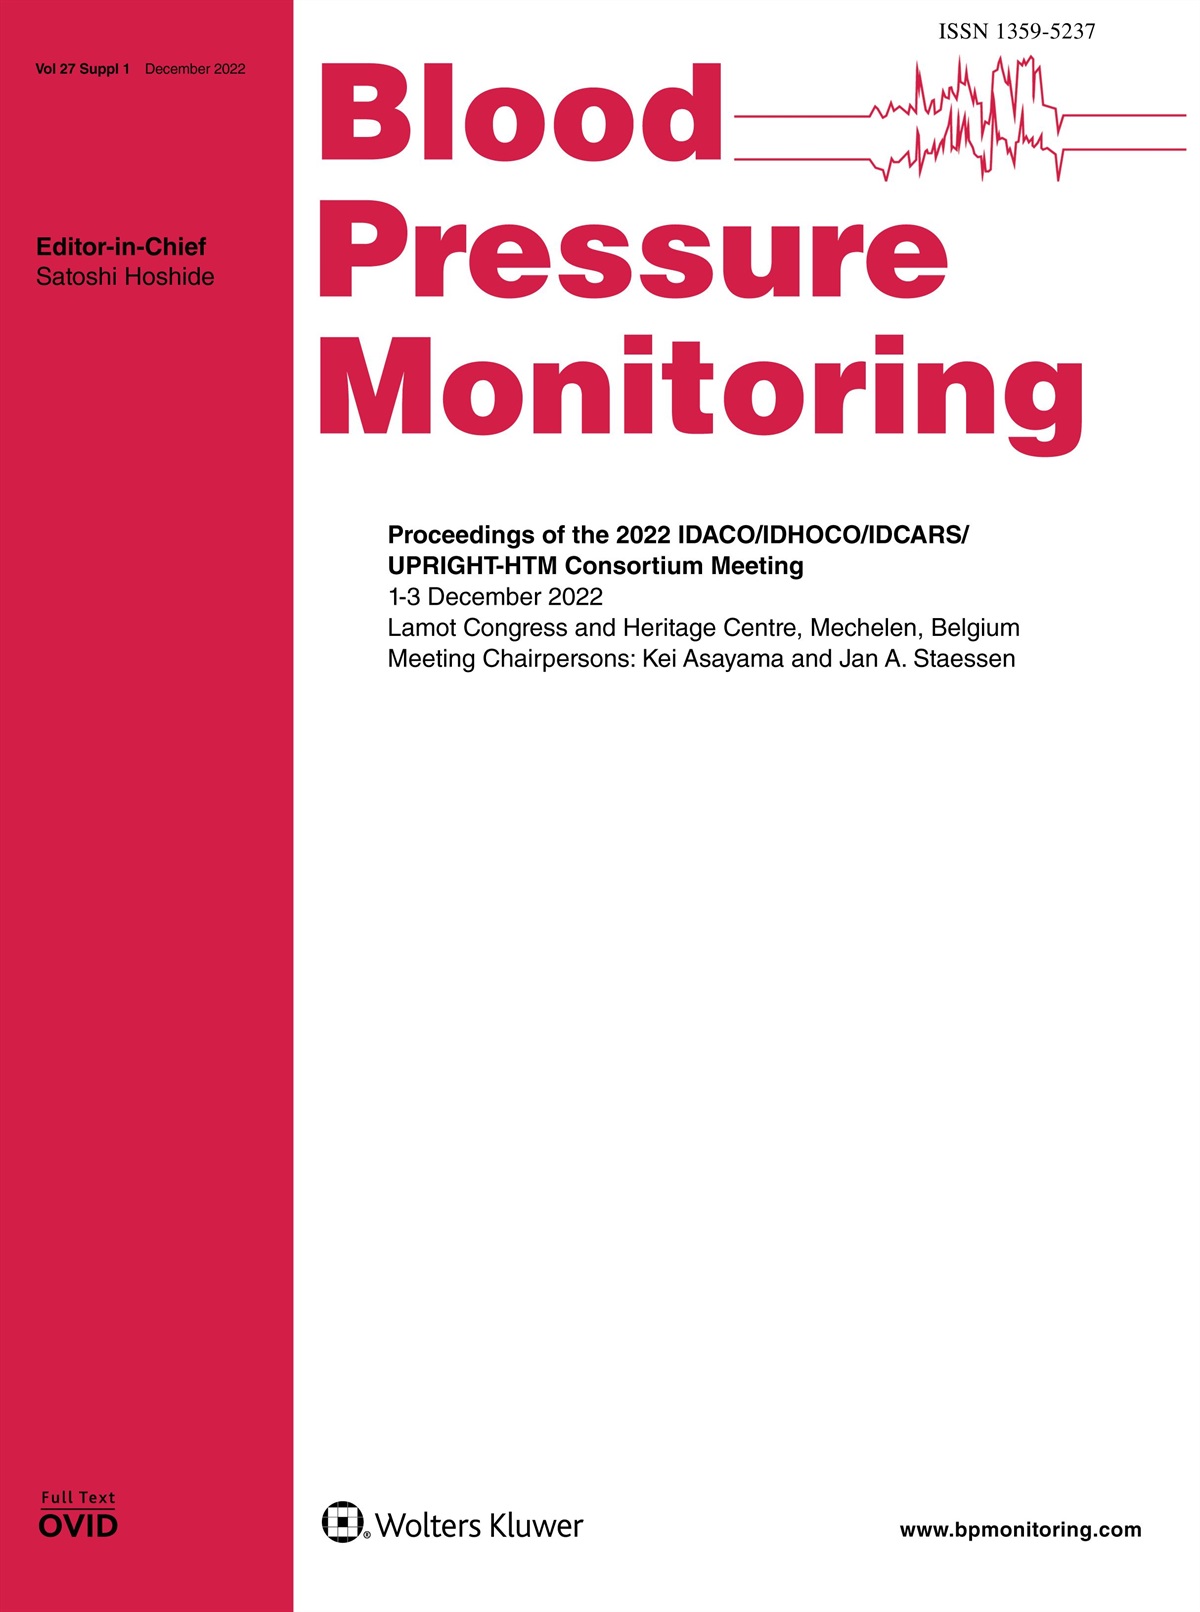 Glaucomatous optic neuropathy in relation to 24-h ambulatory blood pressure monitoring